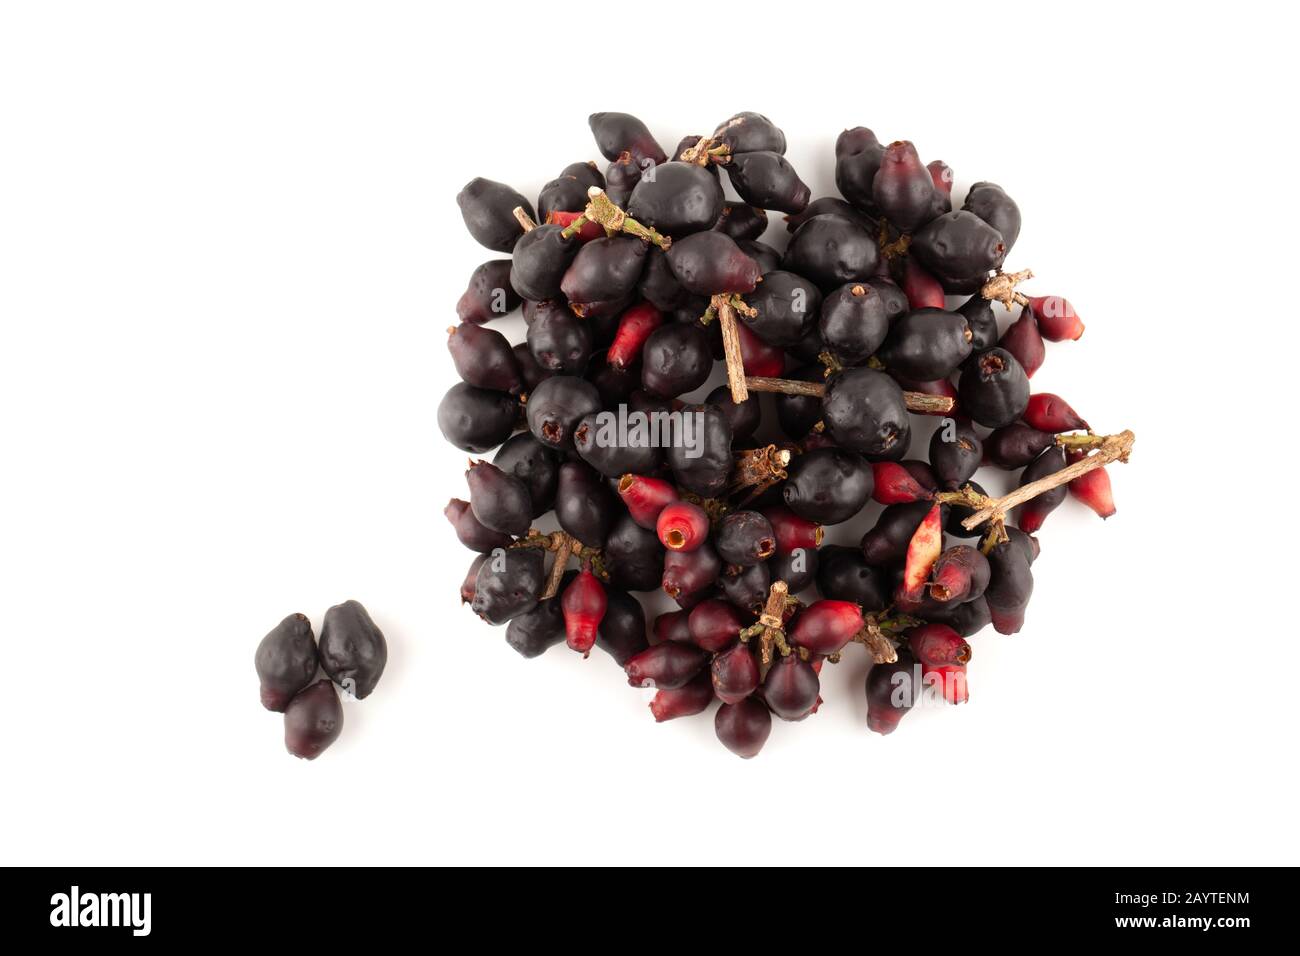 Top view angle of Syzygium cumini, black plum, jamun or Syzygium cumini isolated on white background Stock Photo